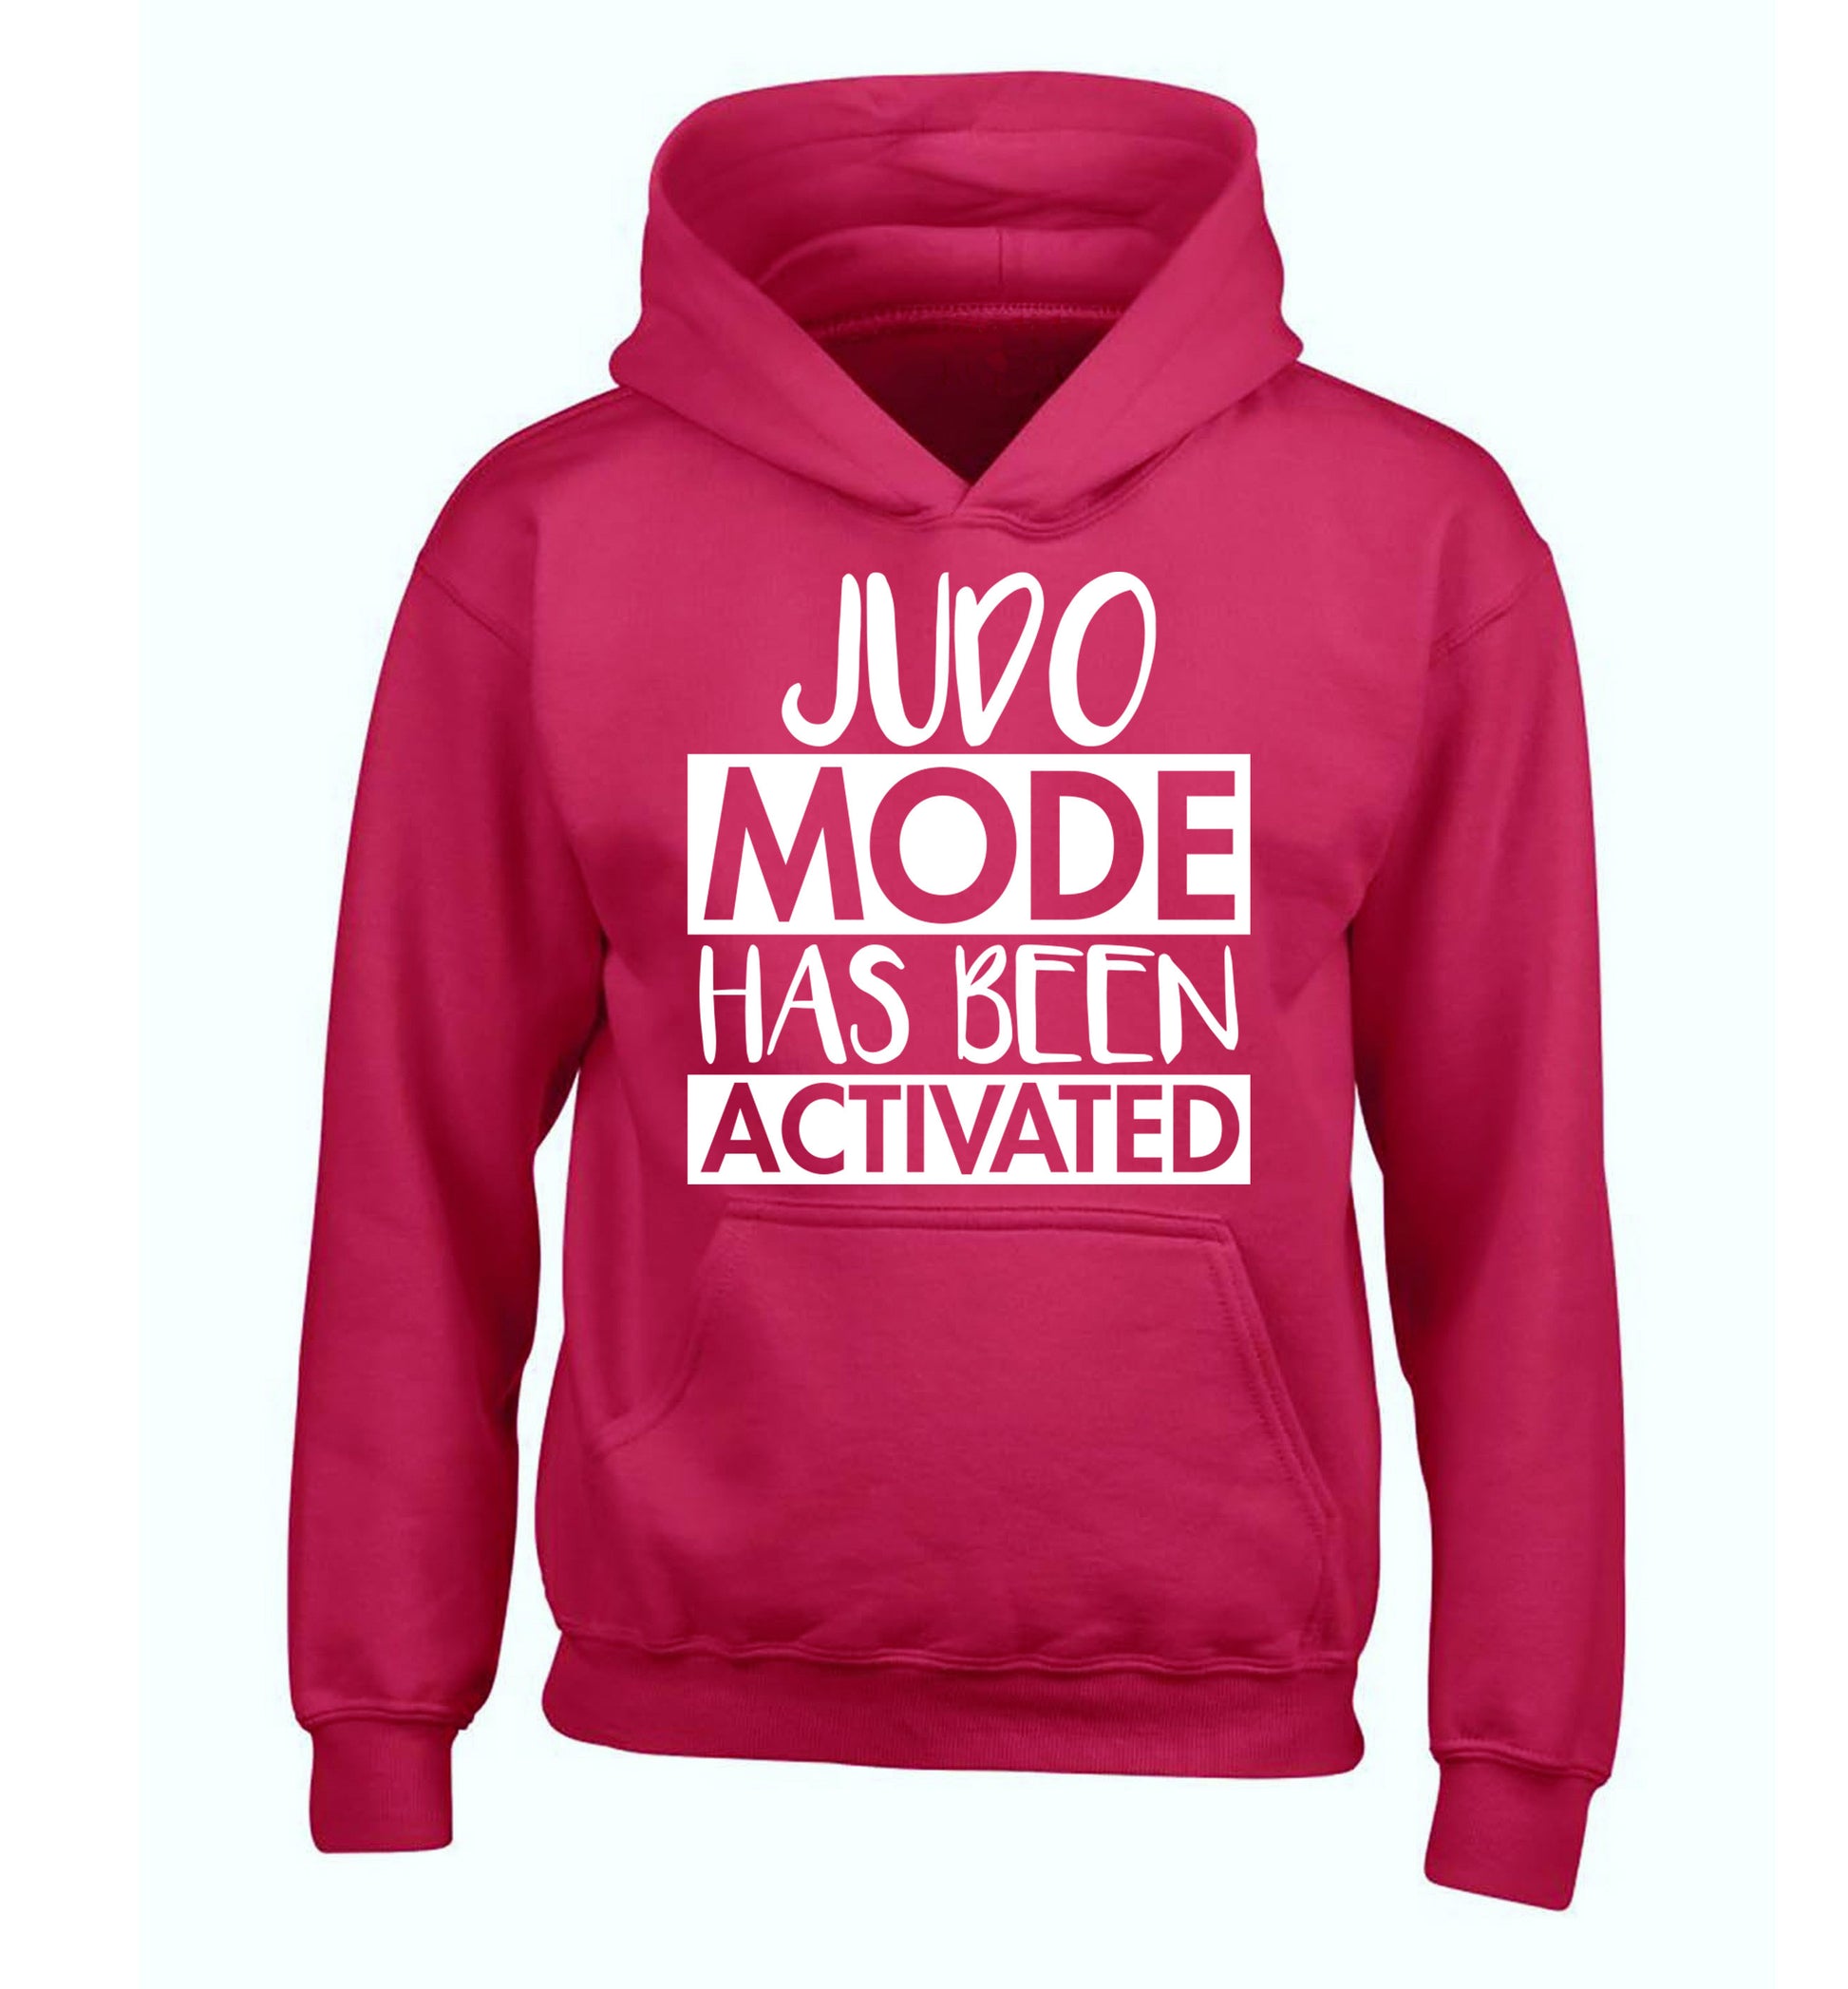 Judo mode activated children's pink hoodie 12-14 Years